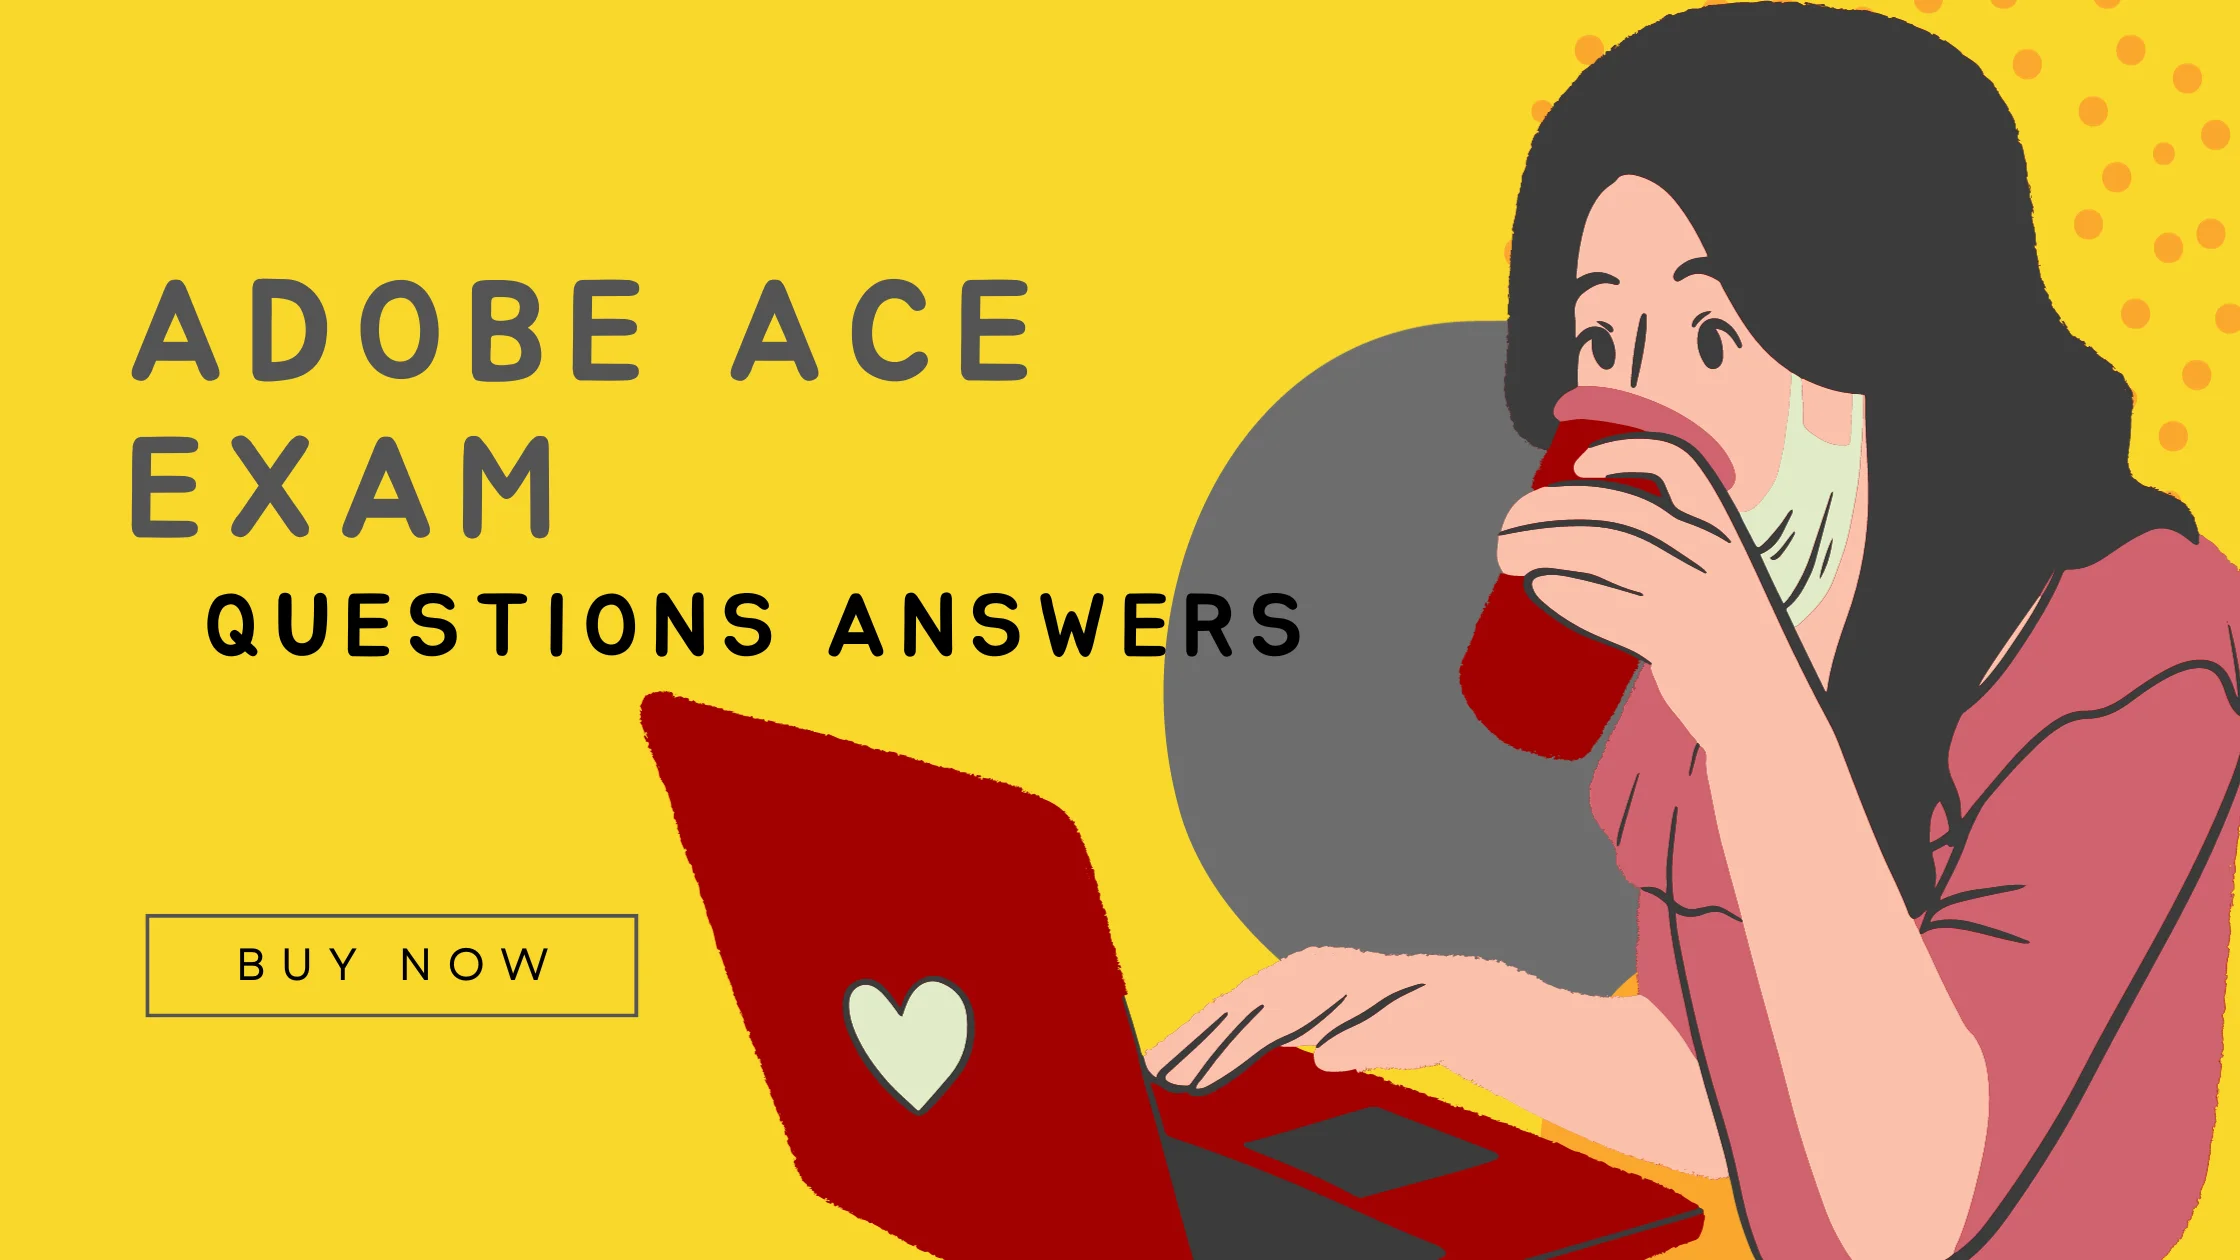 Adobe ACE Exam promotion